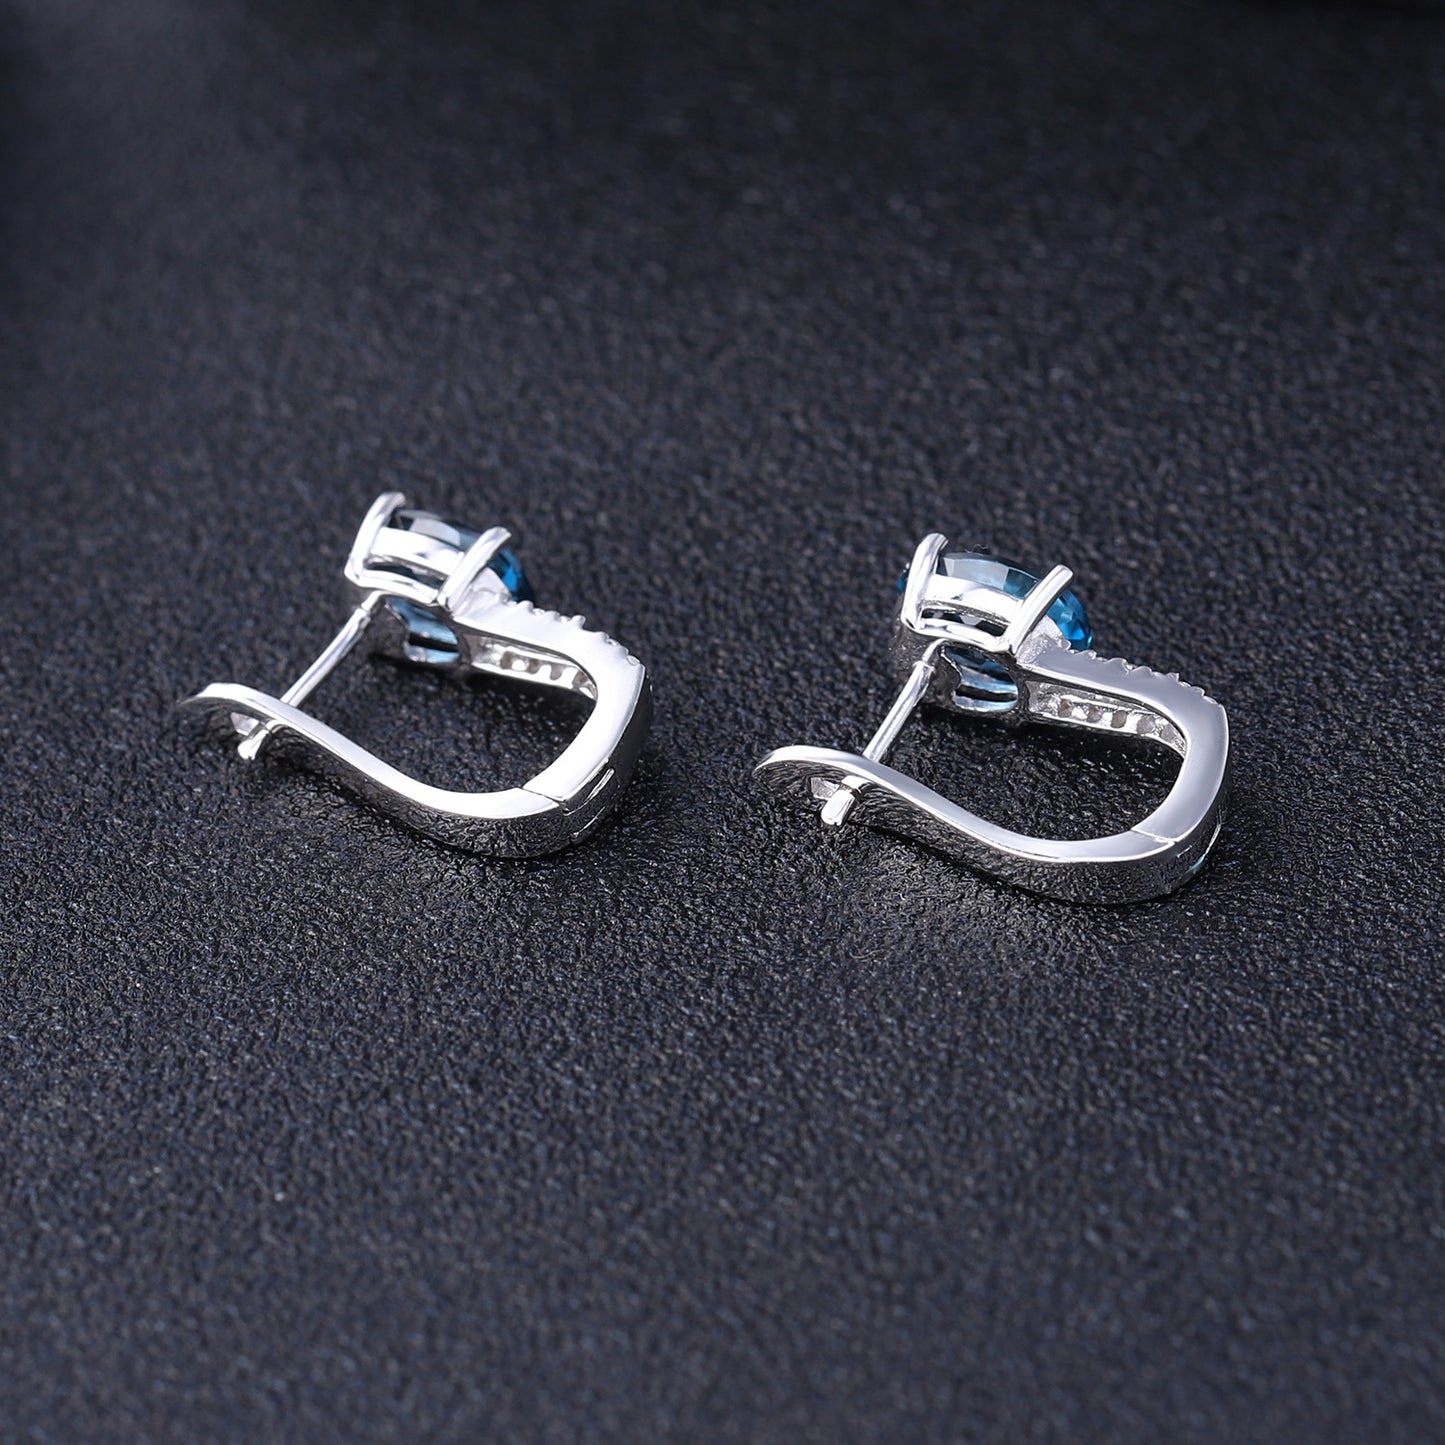 European Natural Topaz Oval Shape Sterling Silver Studs Earrings for Women